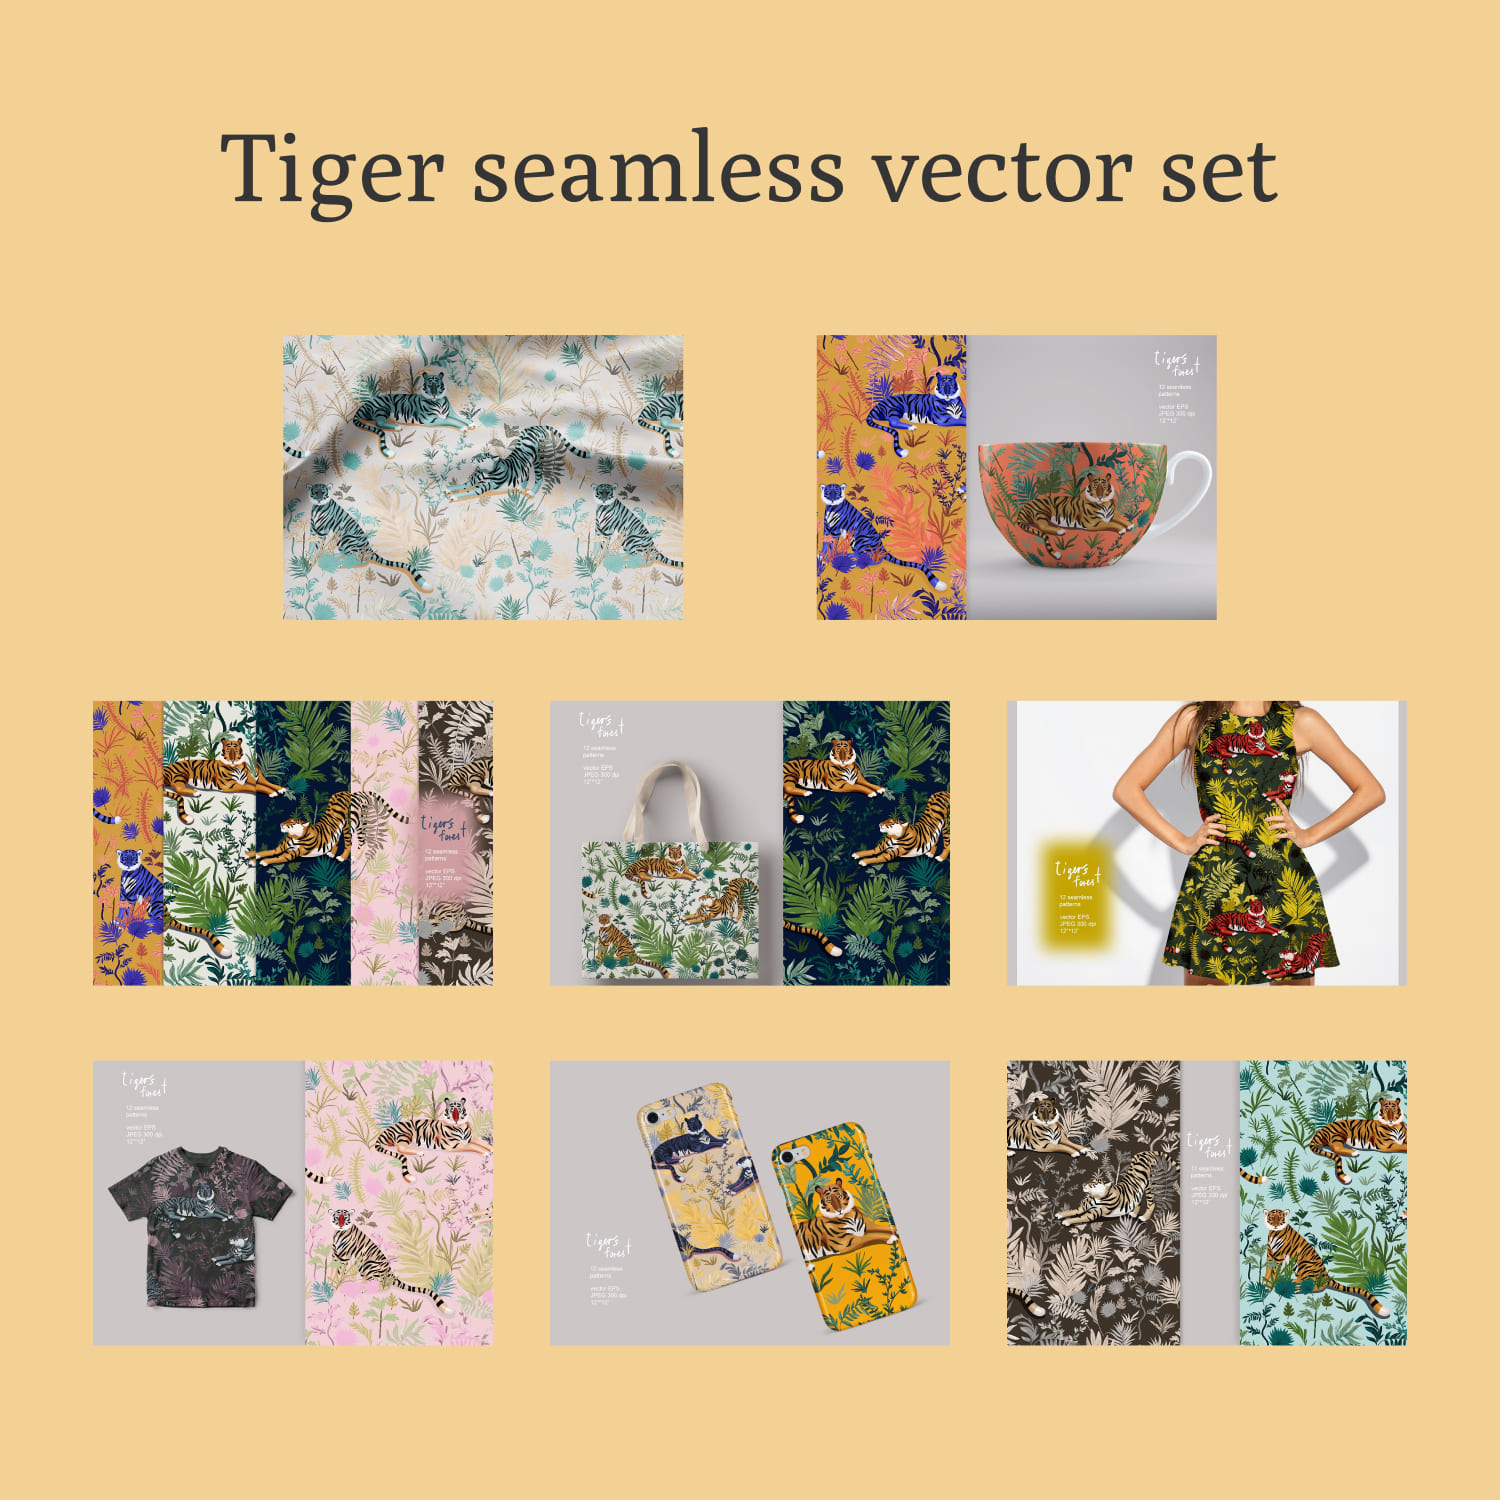 Tiger seamless vector set.